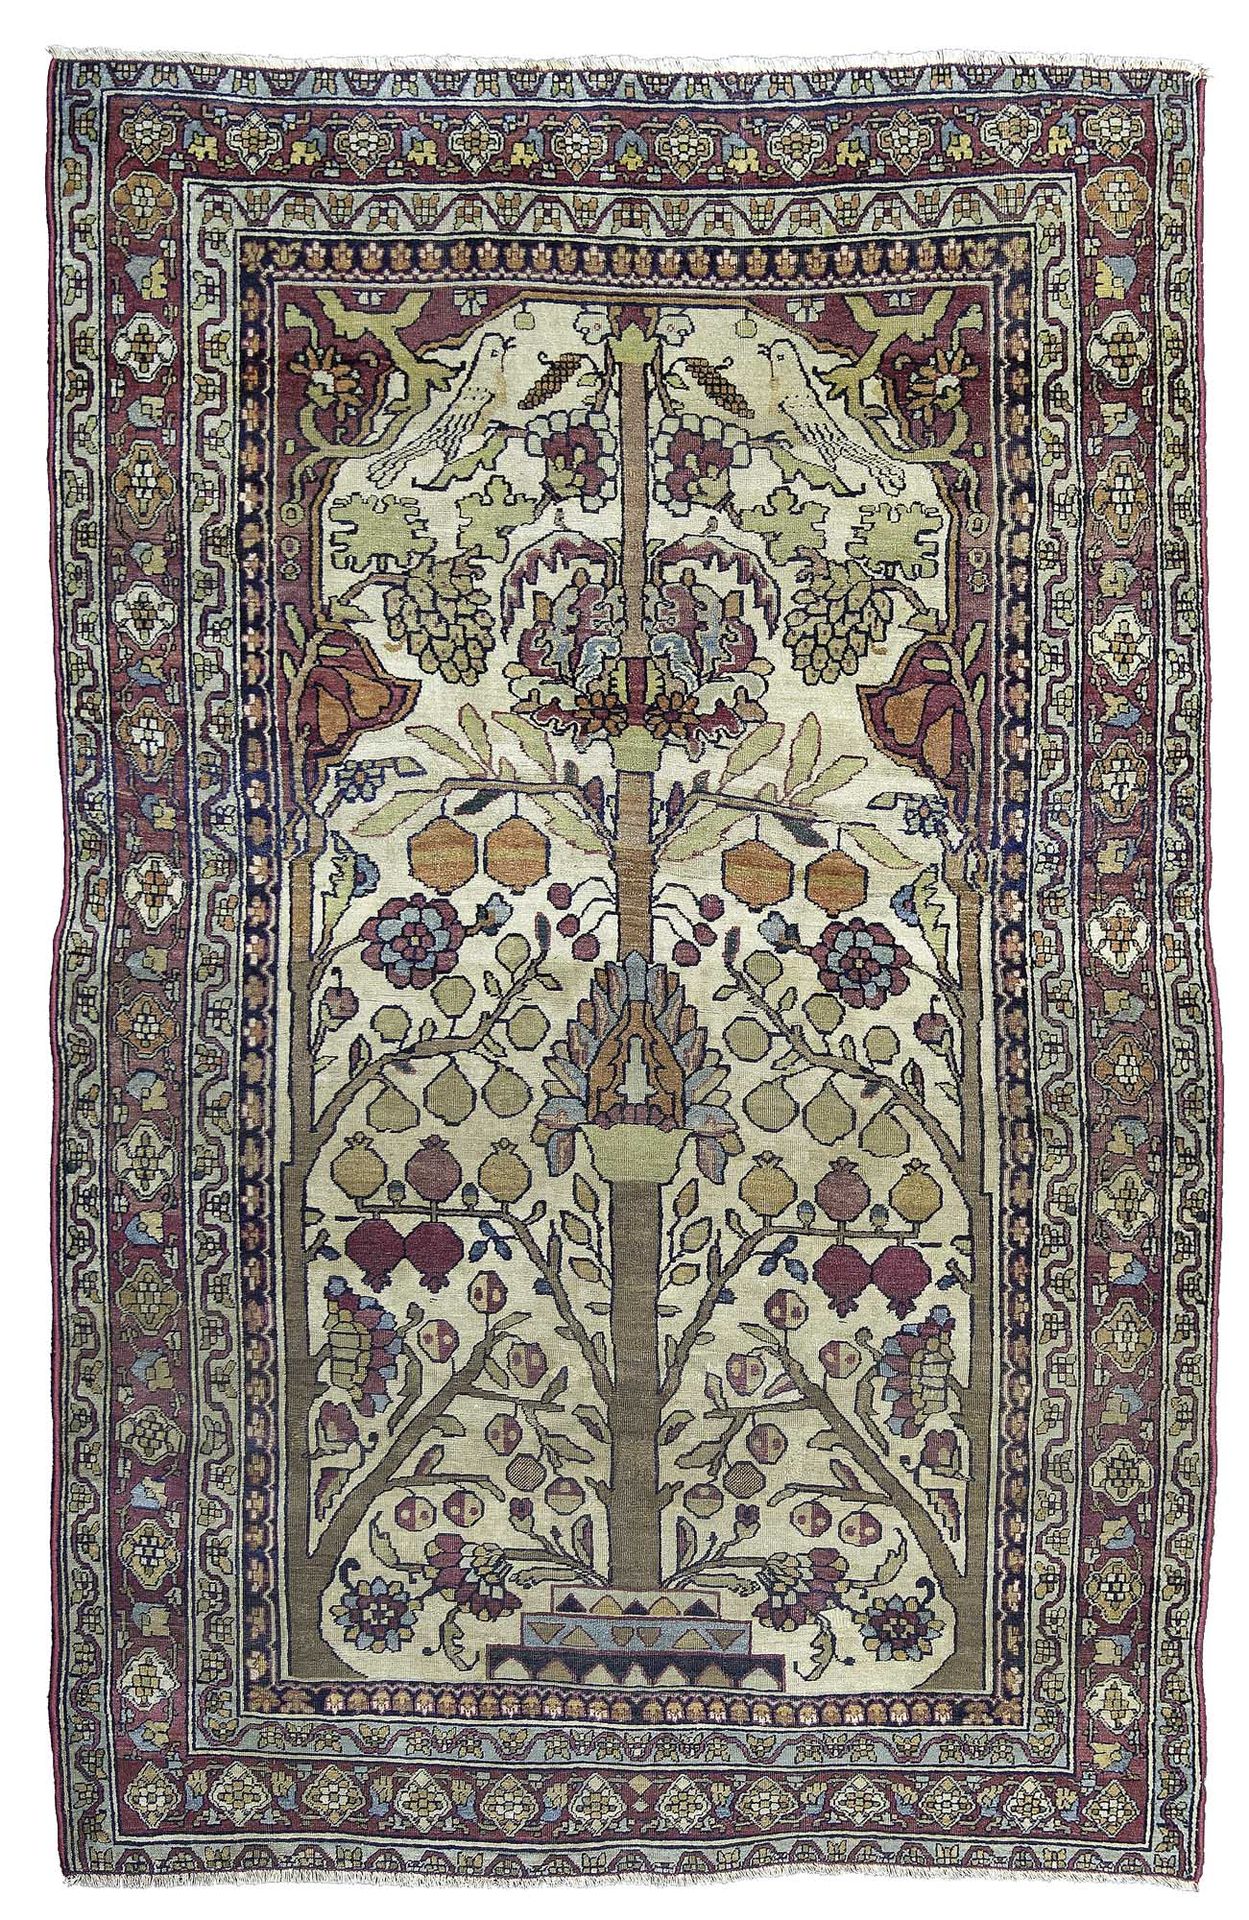 Null KIRMAN-LAVER carpet (Persia), mid 19th century

Dimensions : 195 x 133cm

T&hellip;